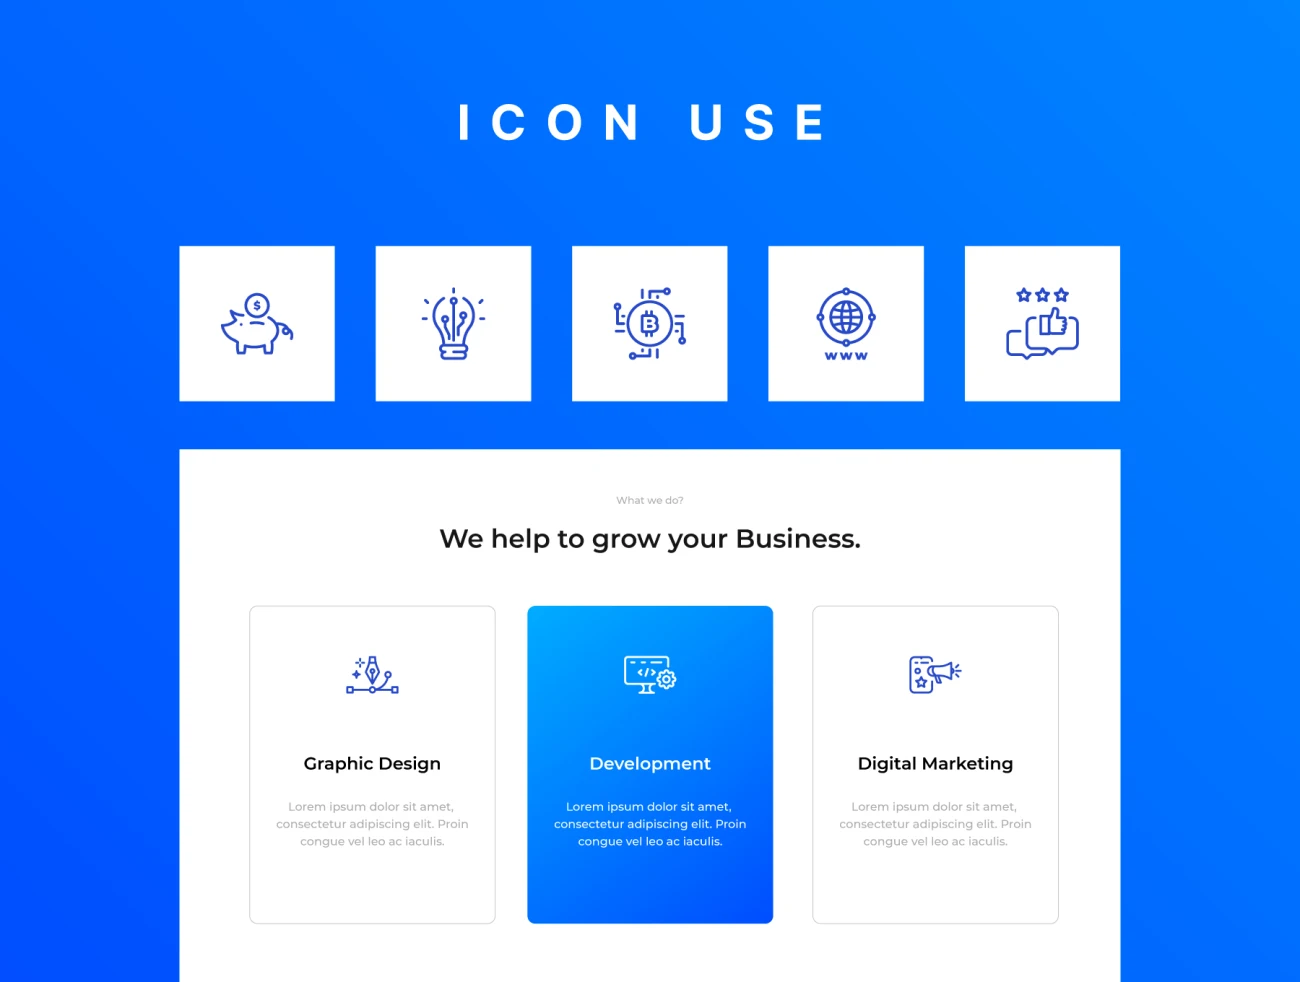 Digital Agency Startup Icons 数字营销团队线条单色图标包-3D/图标-到位啦UI